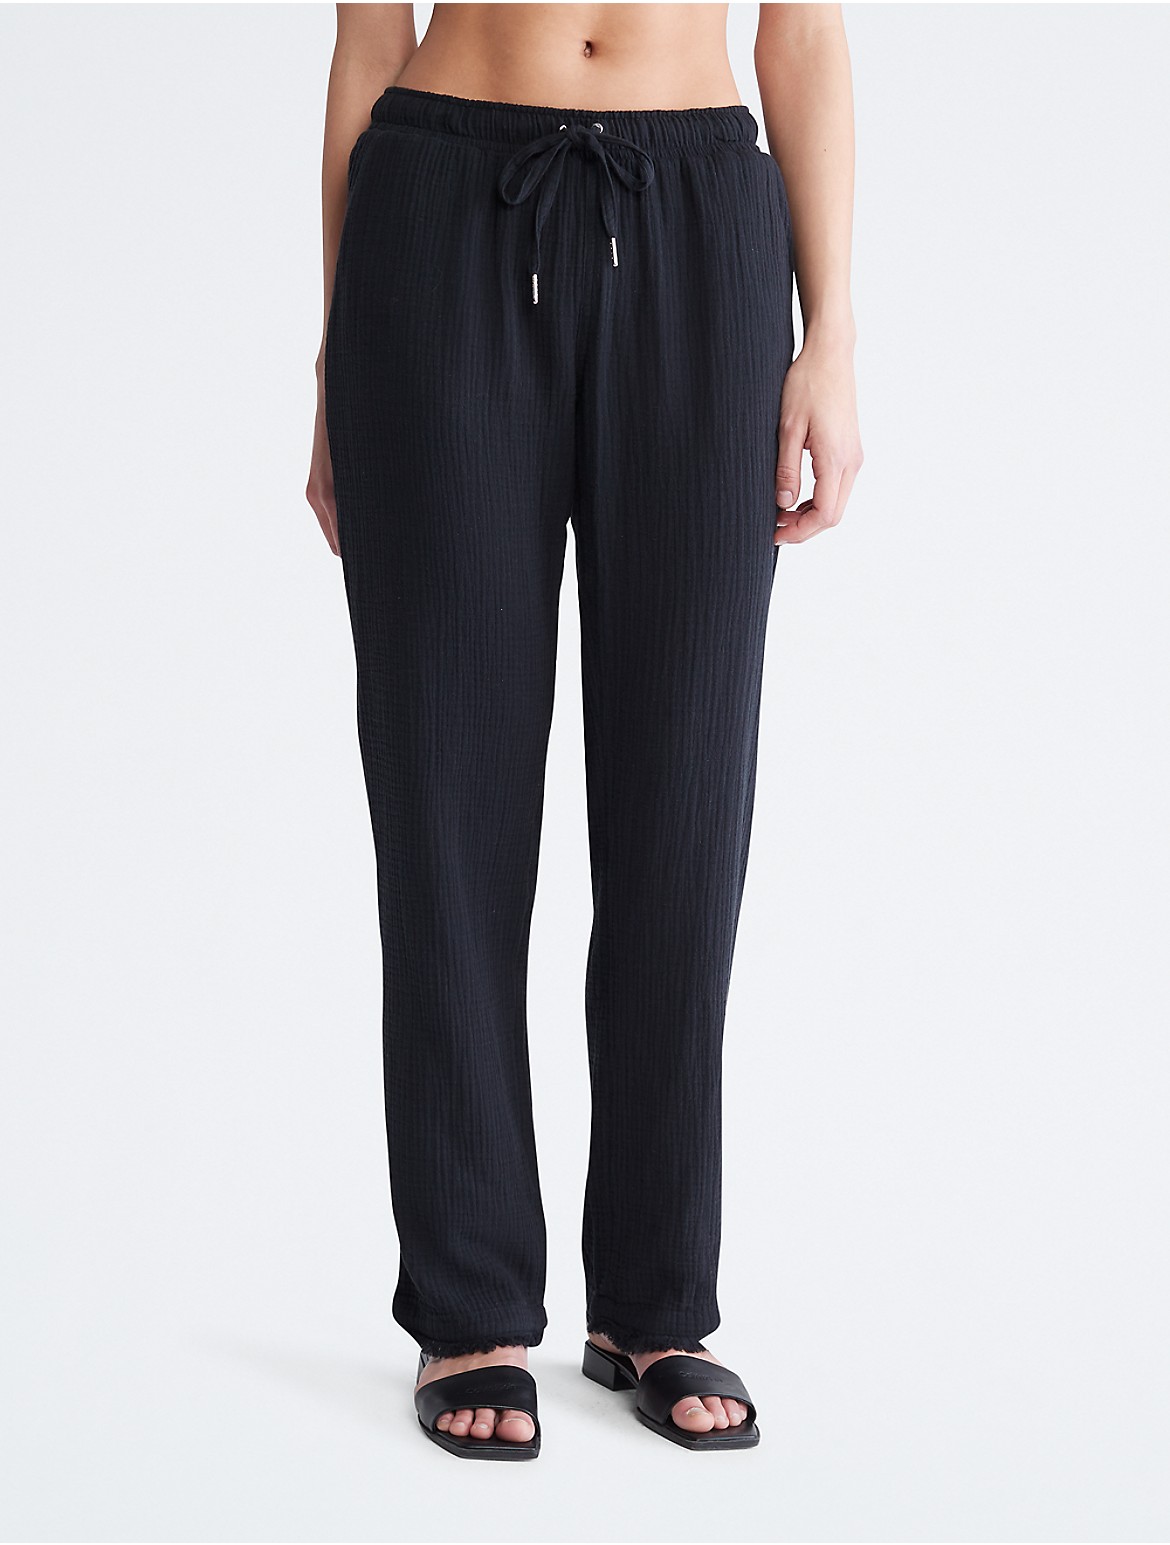 Calvin Klein Women's Relaxed Crepe Gauze Drawstring Pants - Black - M